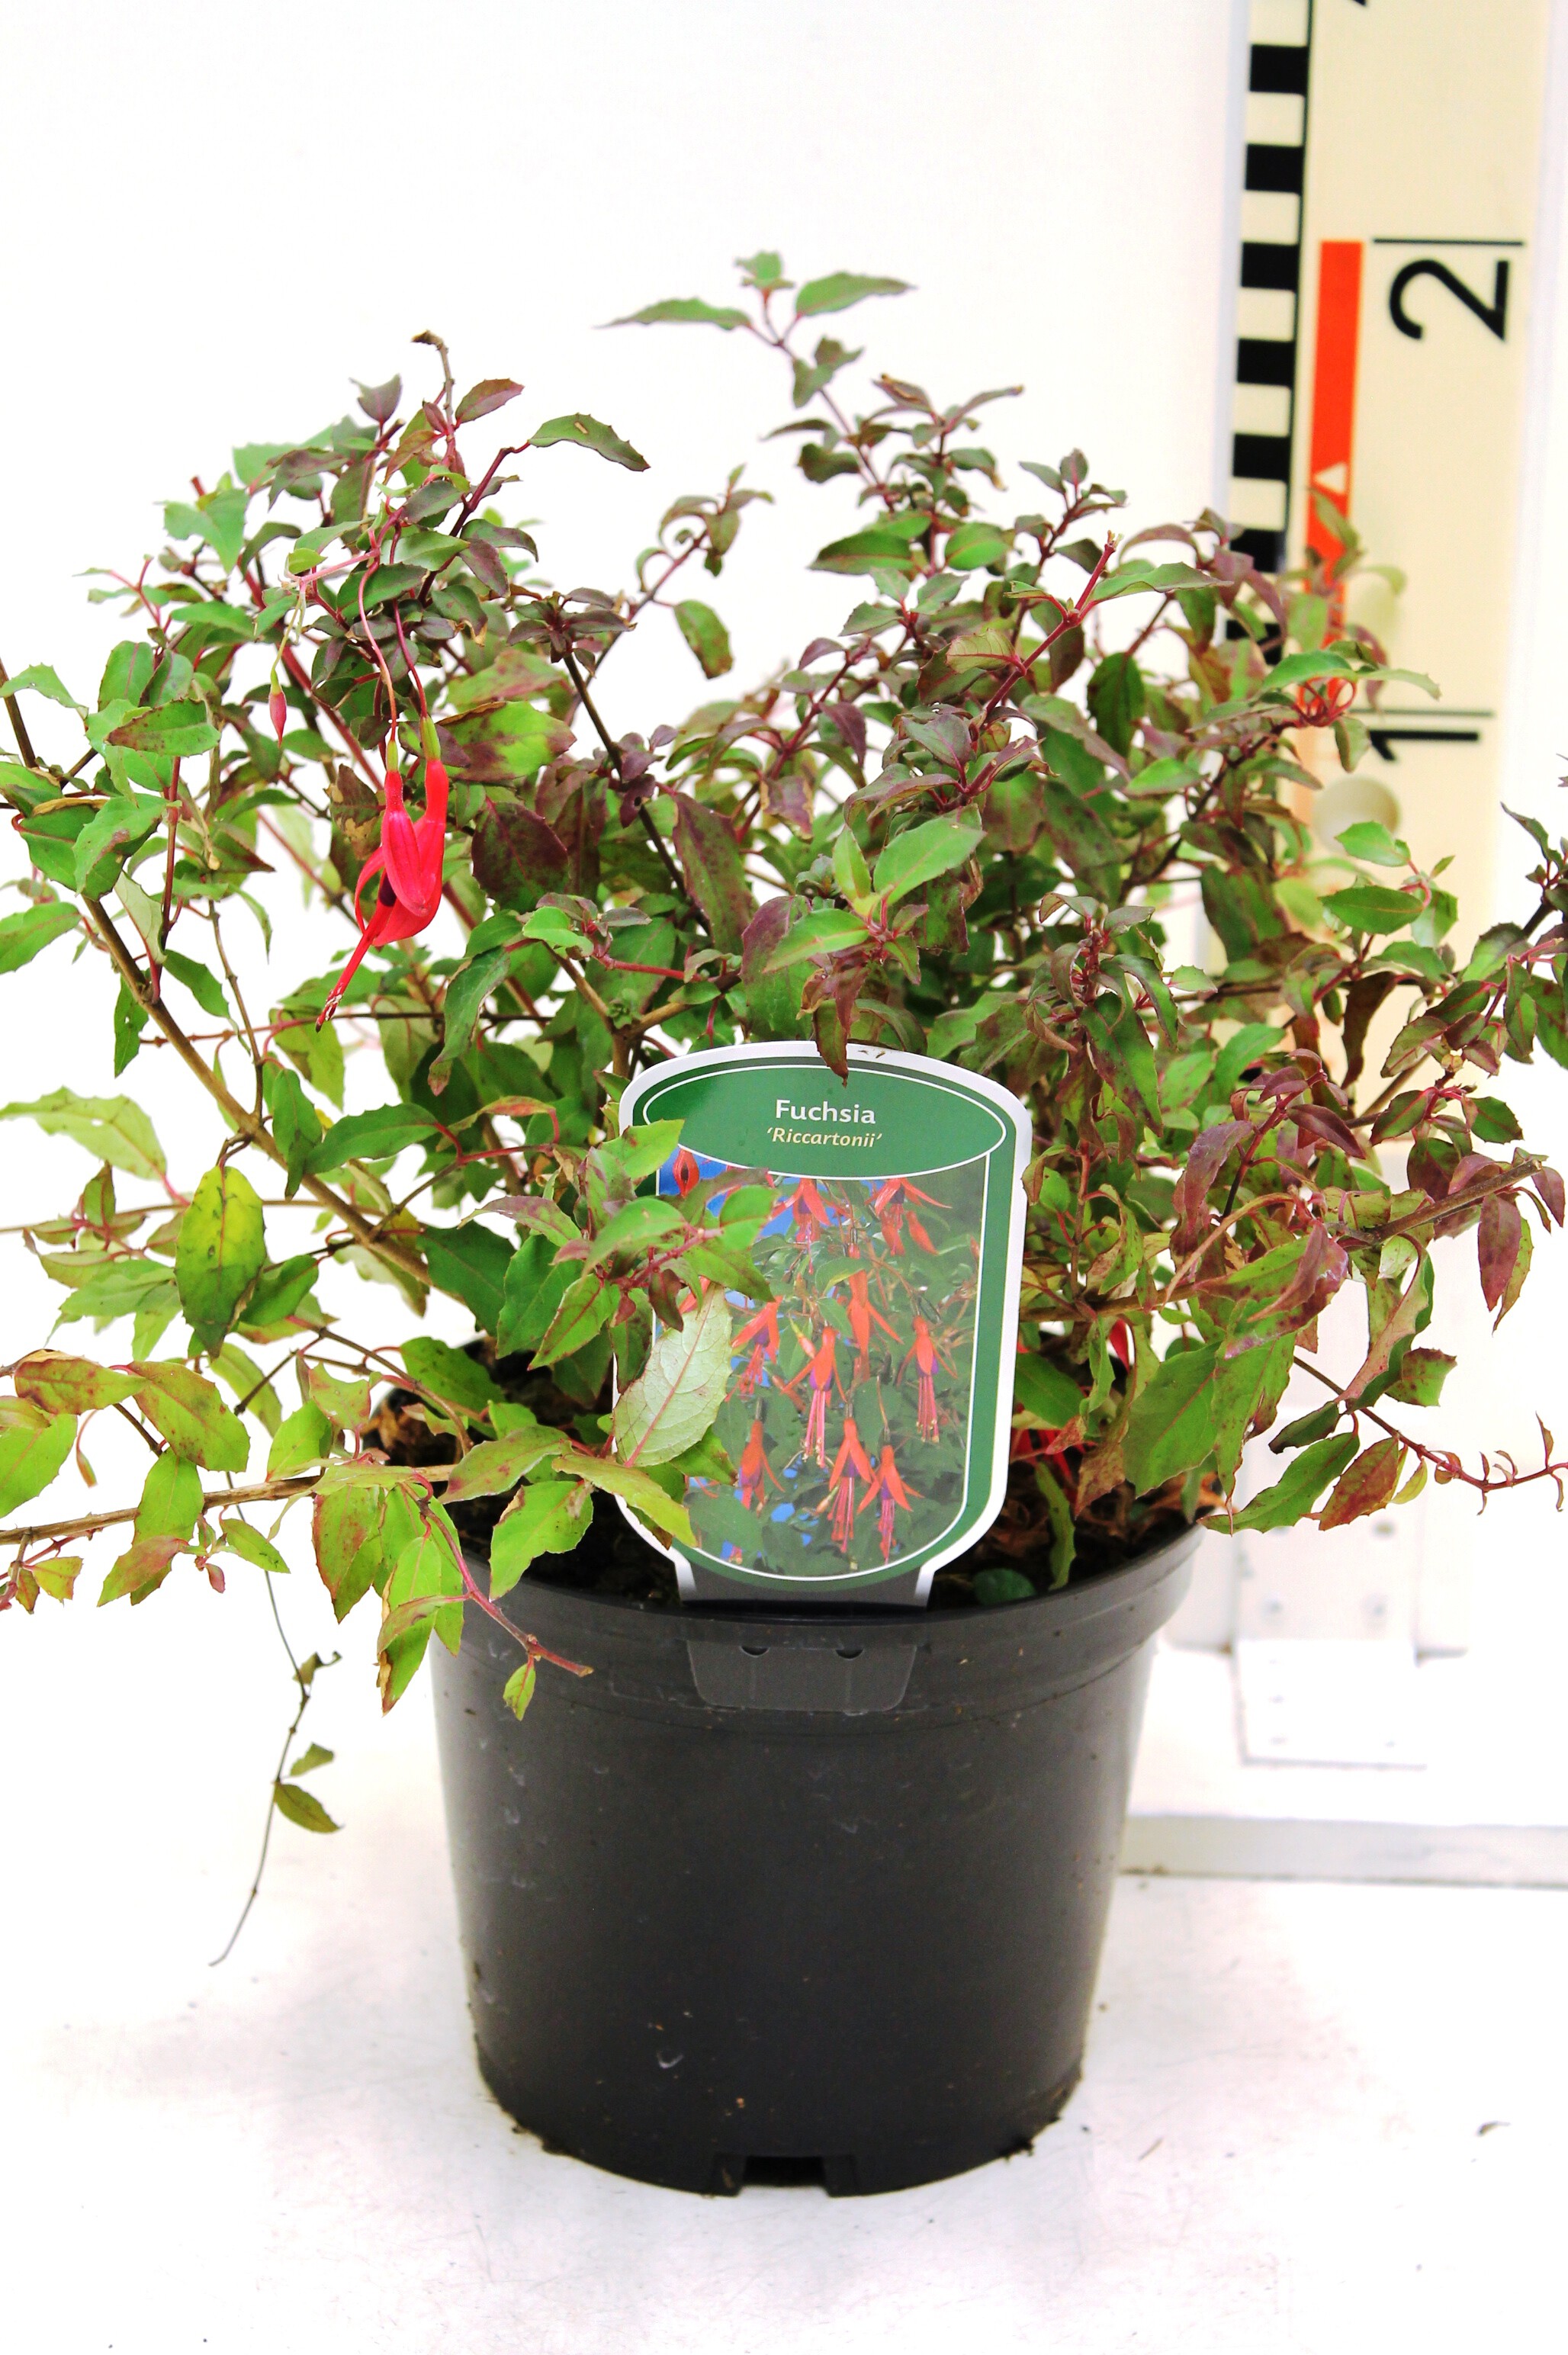 Fuchsia 'Riccartonii' c2